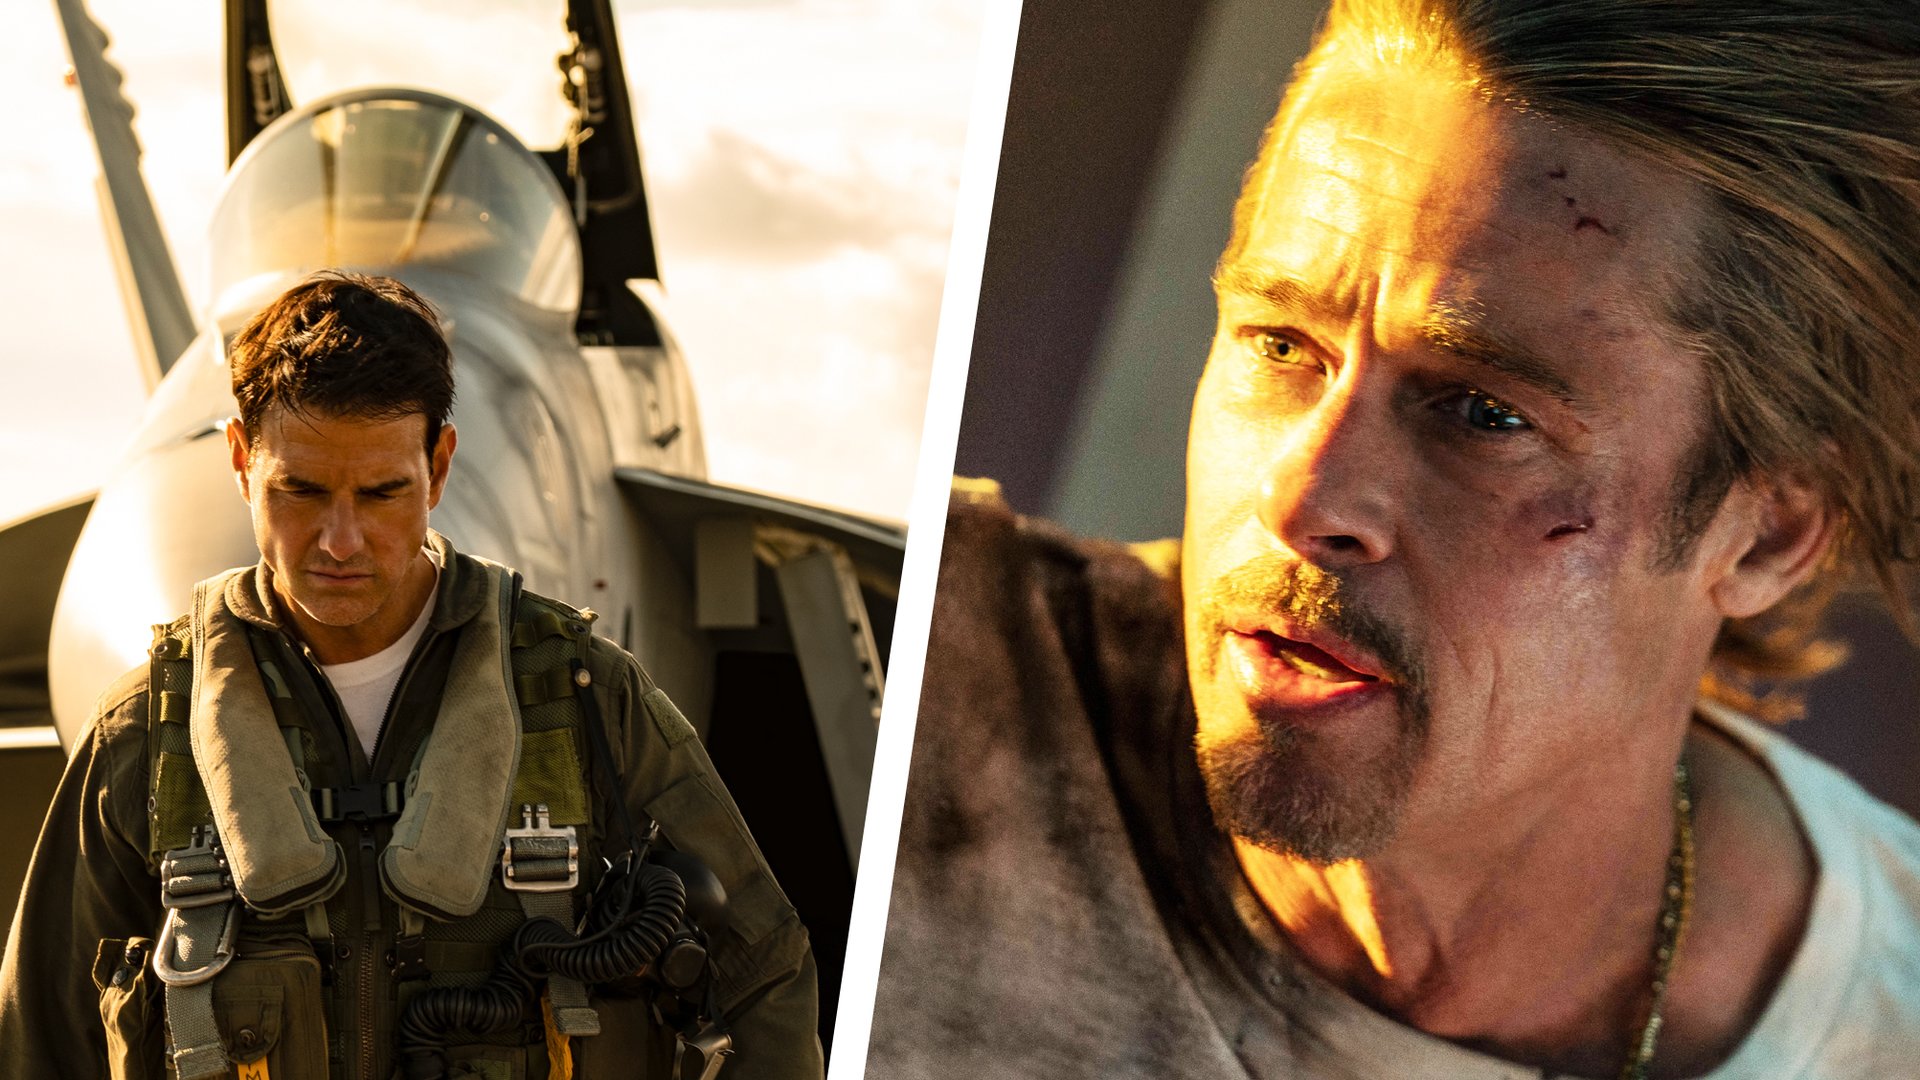 #Nach „Top Gun 2“ folgt der nächste Adrenalinrausch: Regisseur dreht Action-Highlight mit Brad Pitt